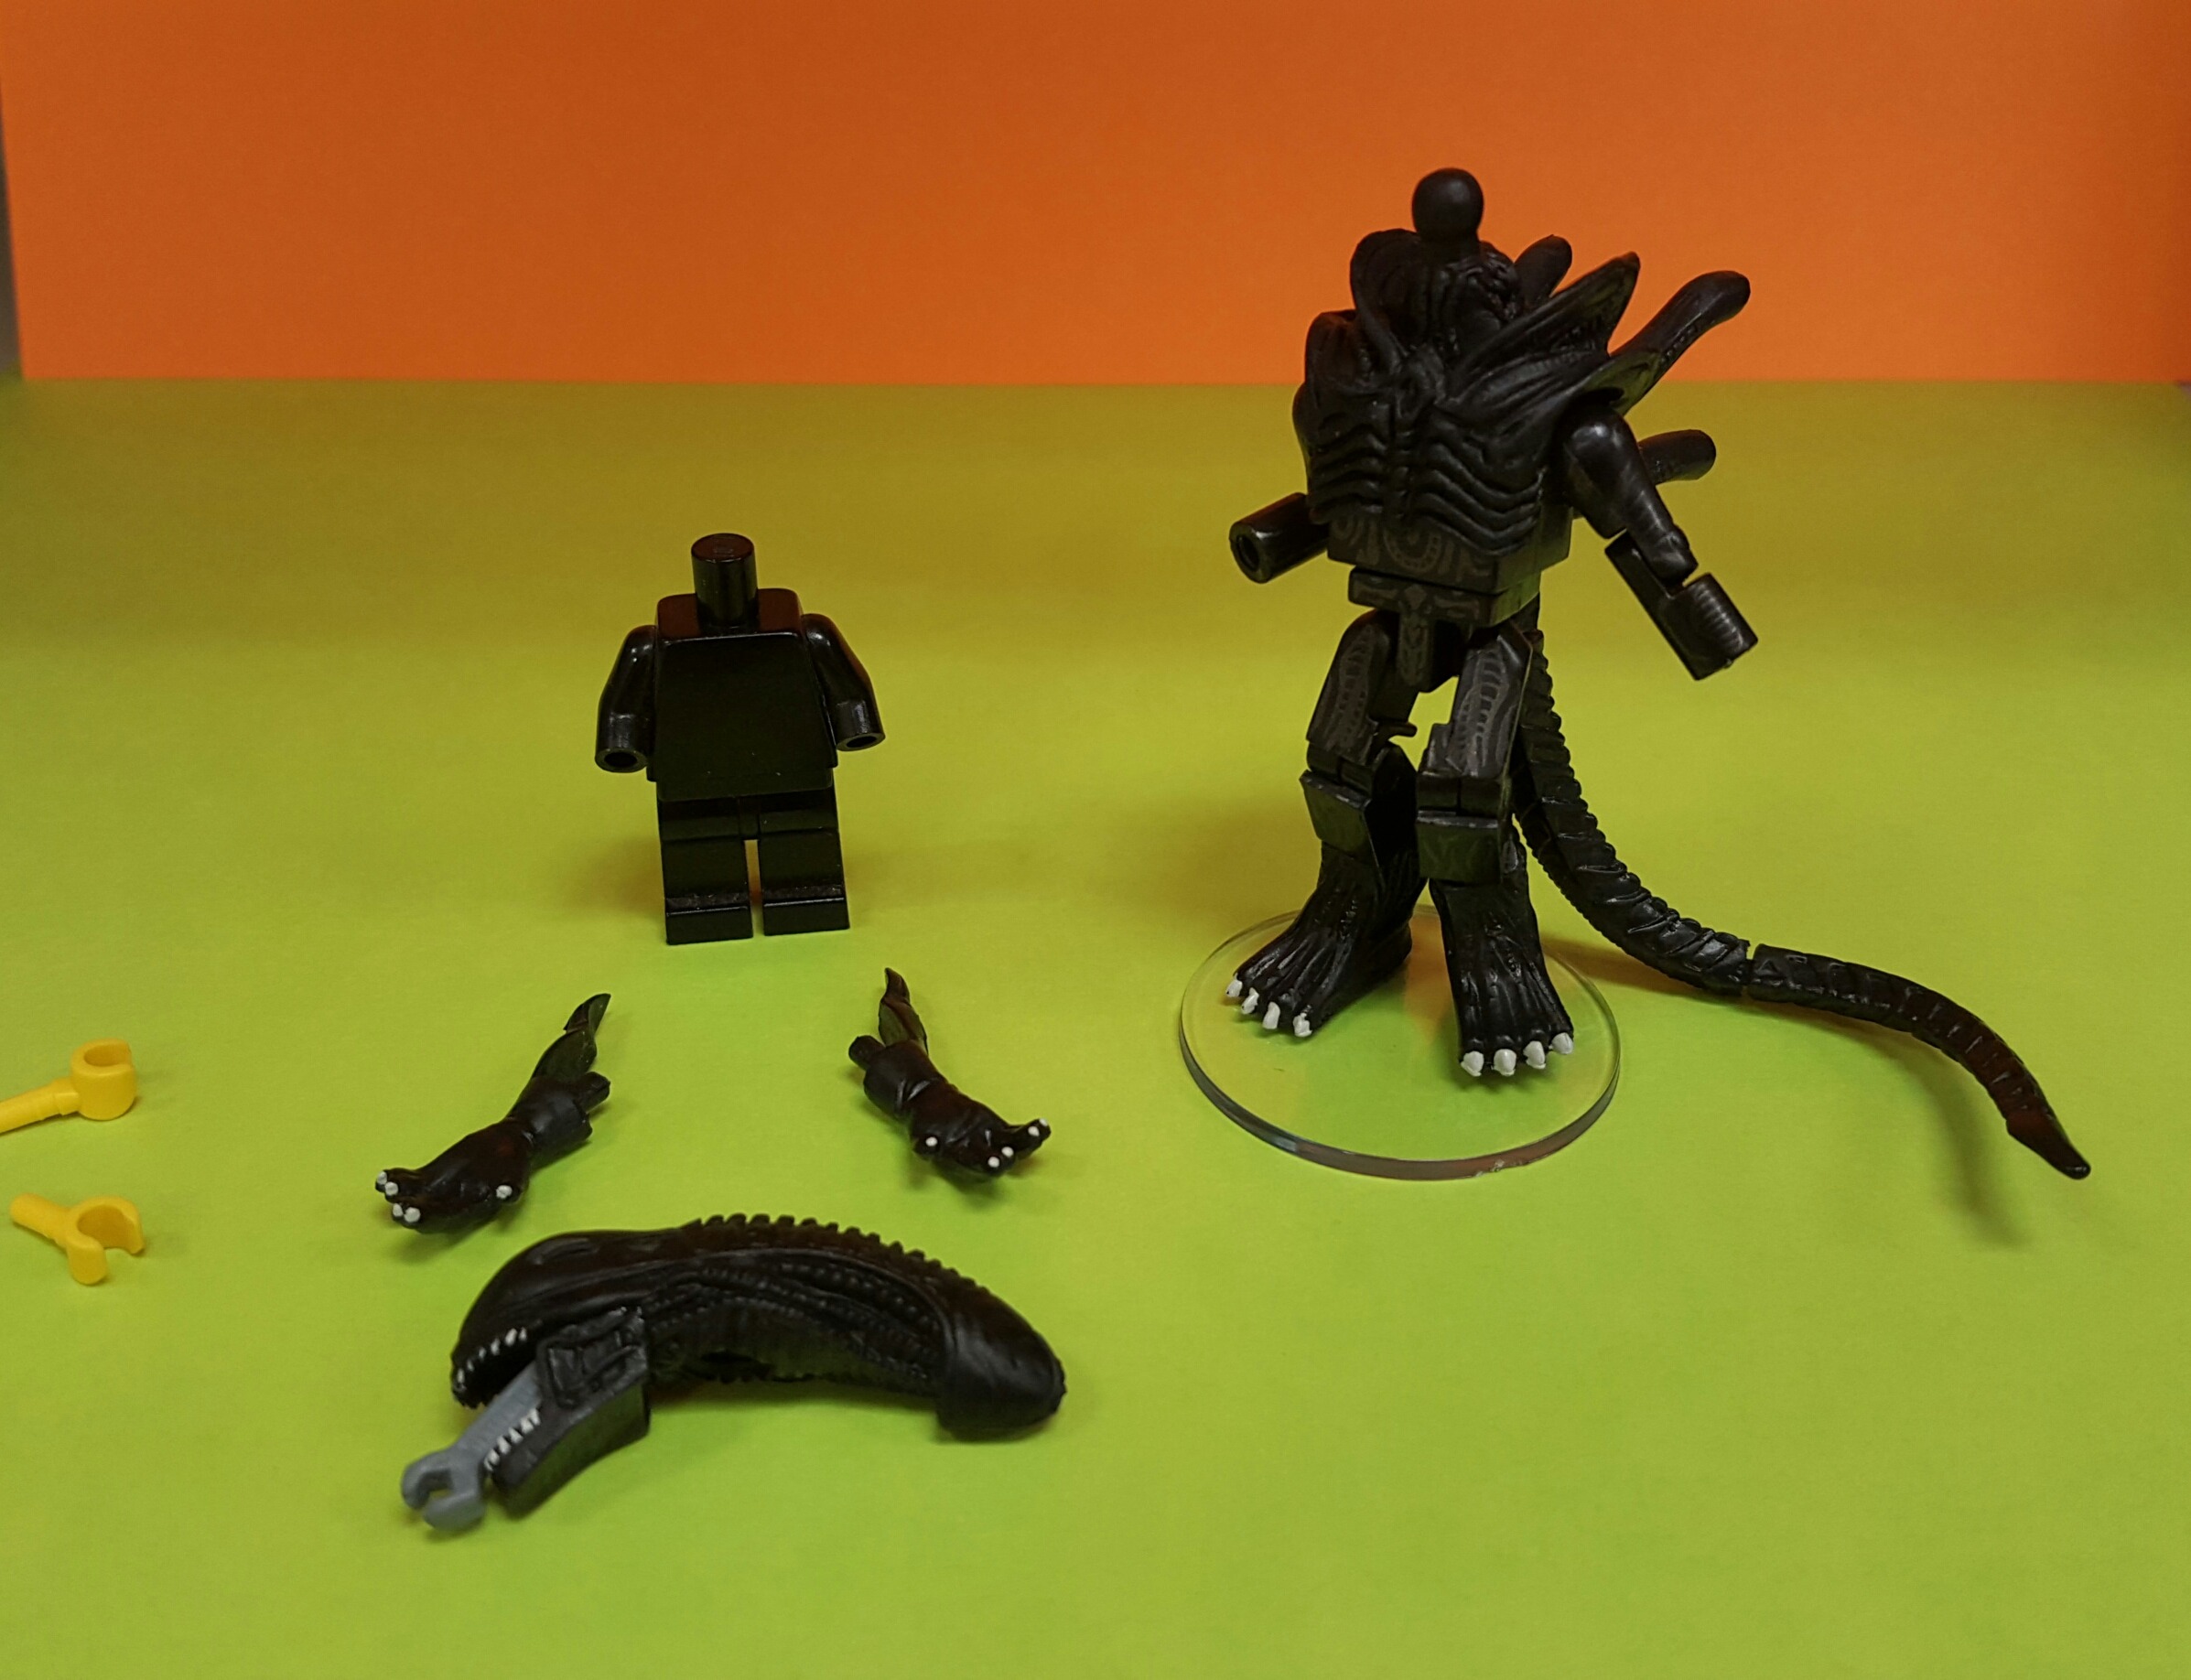 The Lego Xenomorph Minifigure you can. make a lego figure of yourself. 